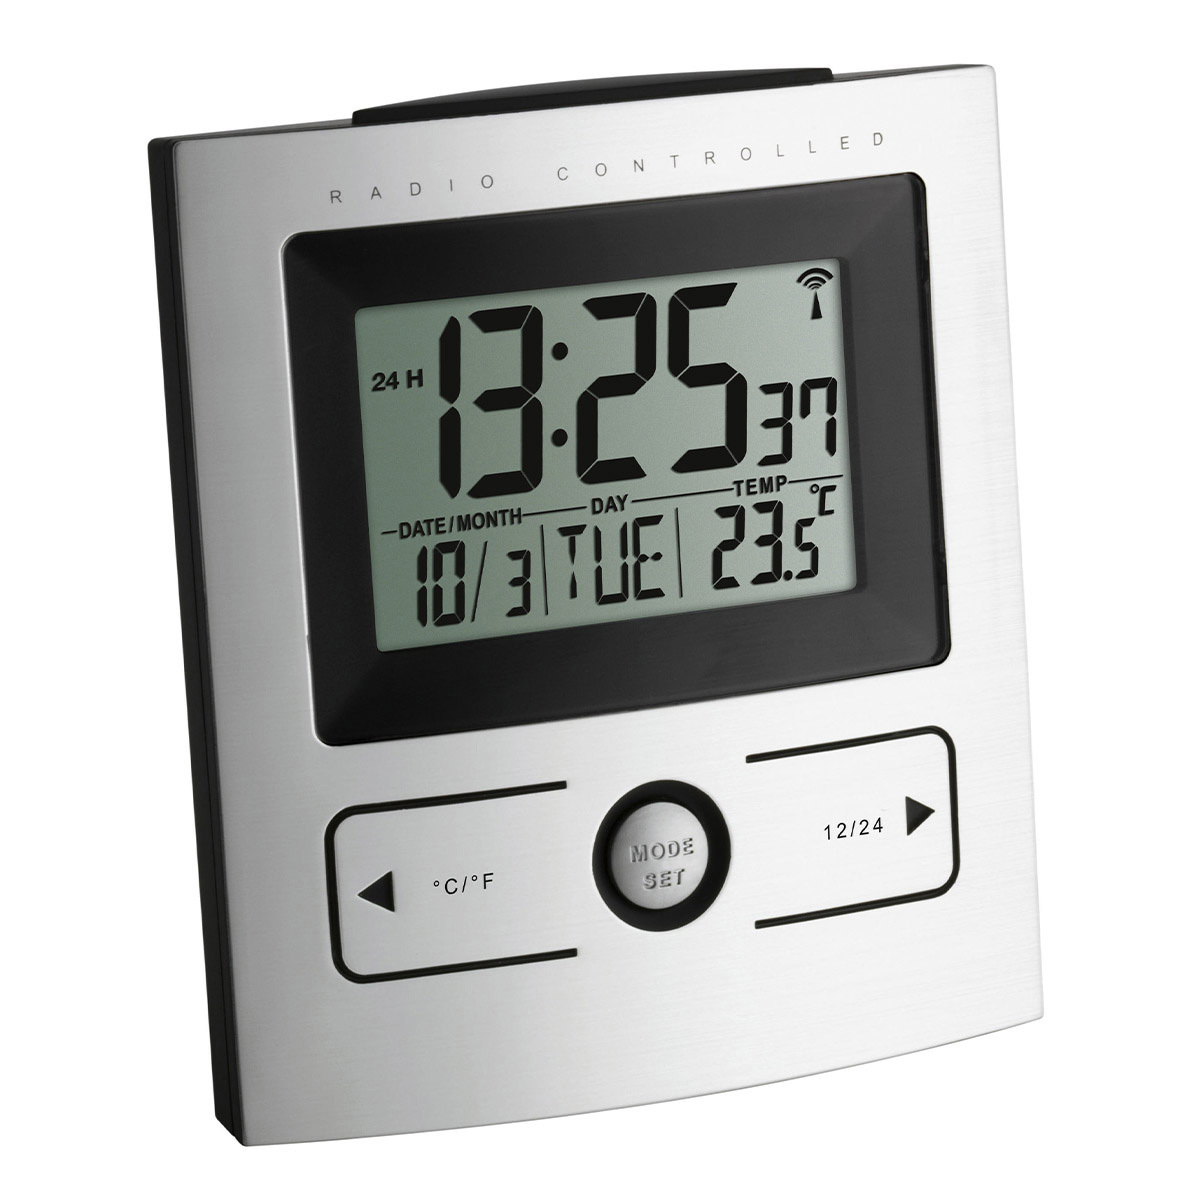 4 x 16,6 x 8,7 cm Color Blanco y bambú Radiodespertador Digital indicador de Temperatura señal horaria DCF iluminación de Pantalla ADE CK1940 